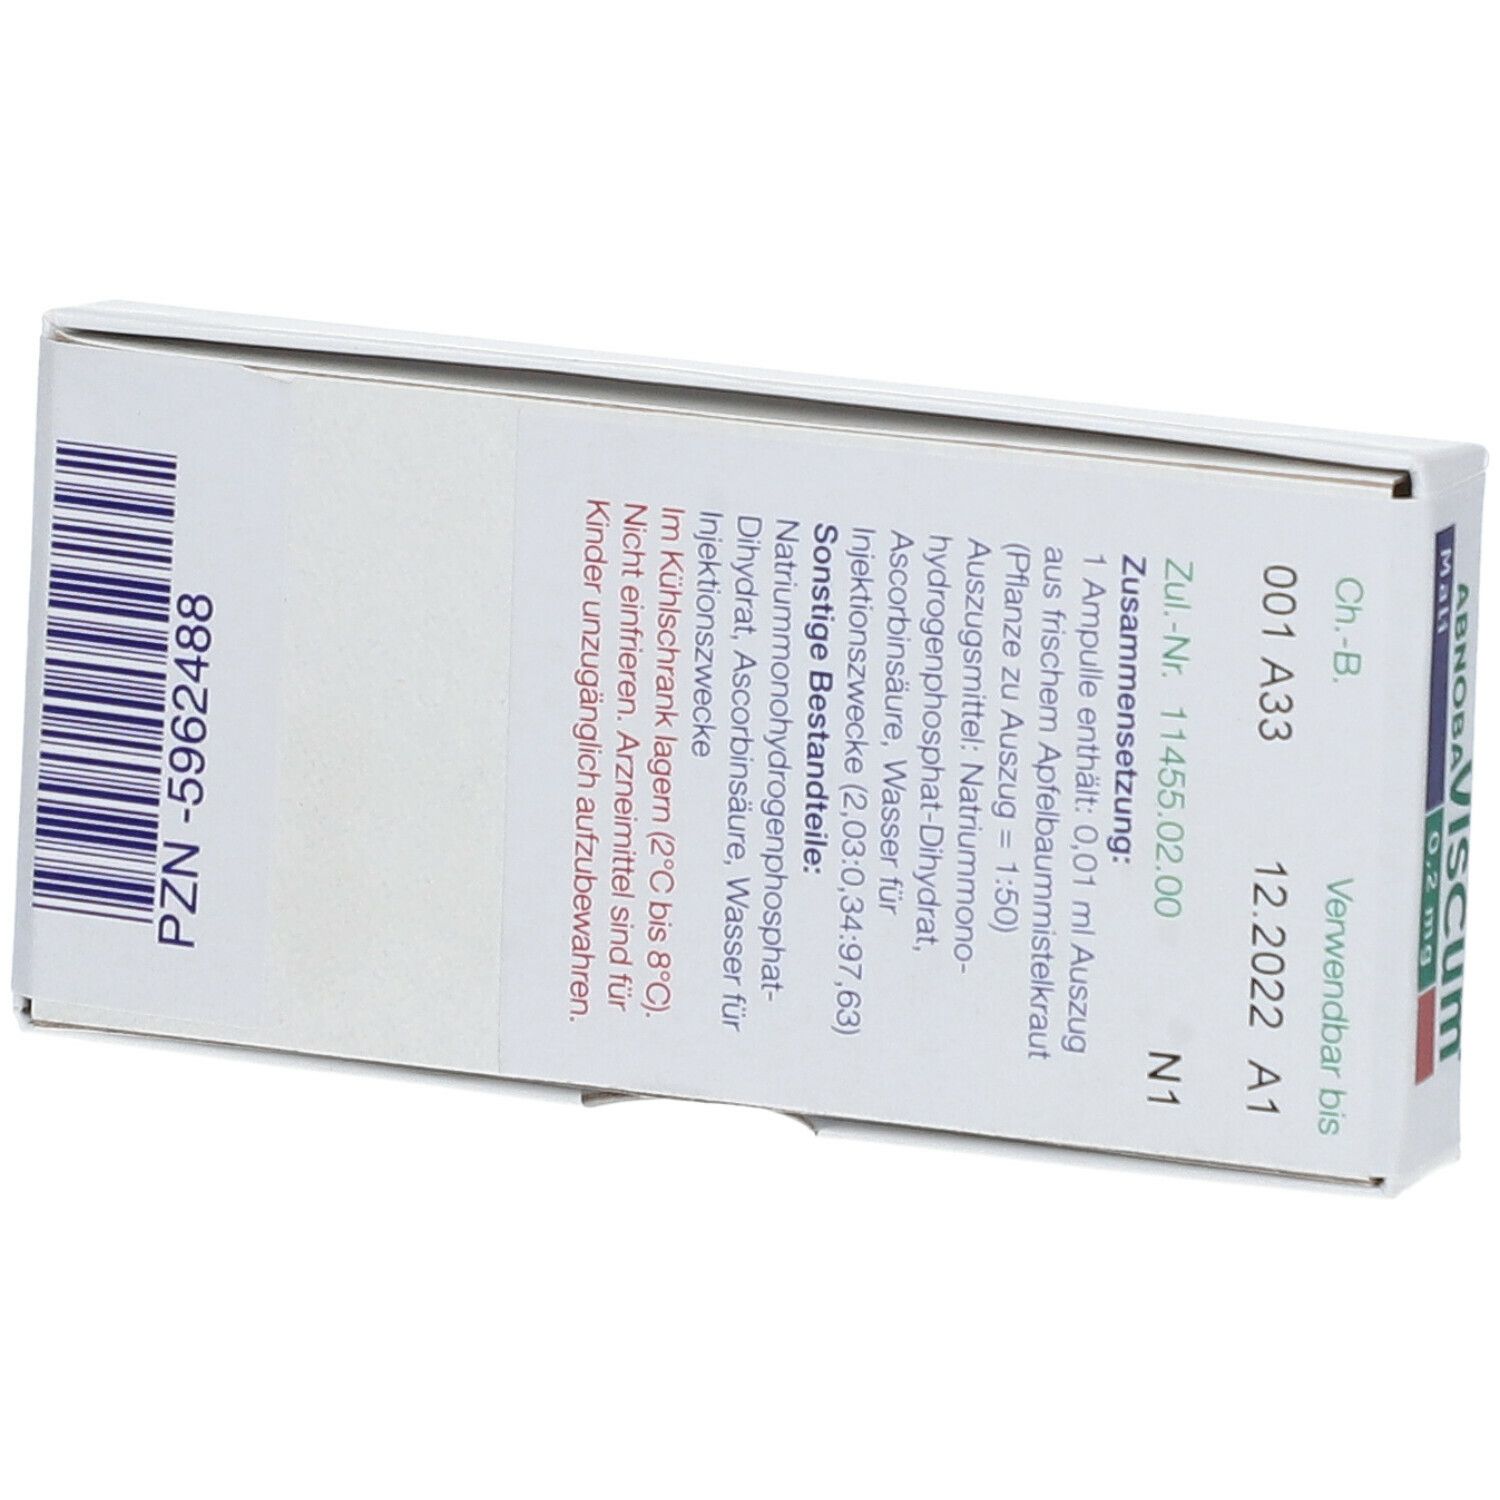 abnobaVISCUM® Mali 0,2 mg Ampullen